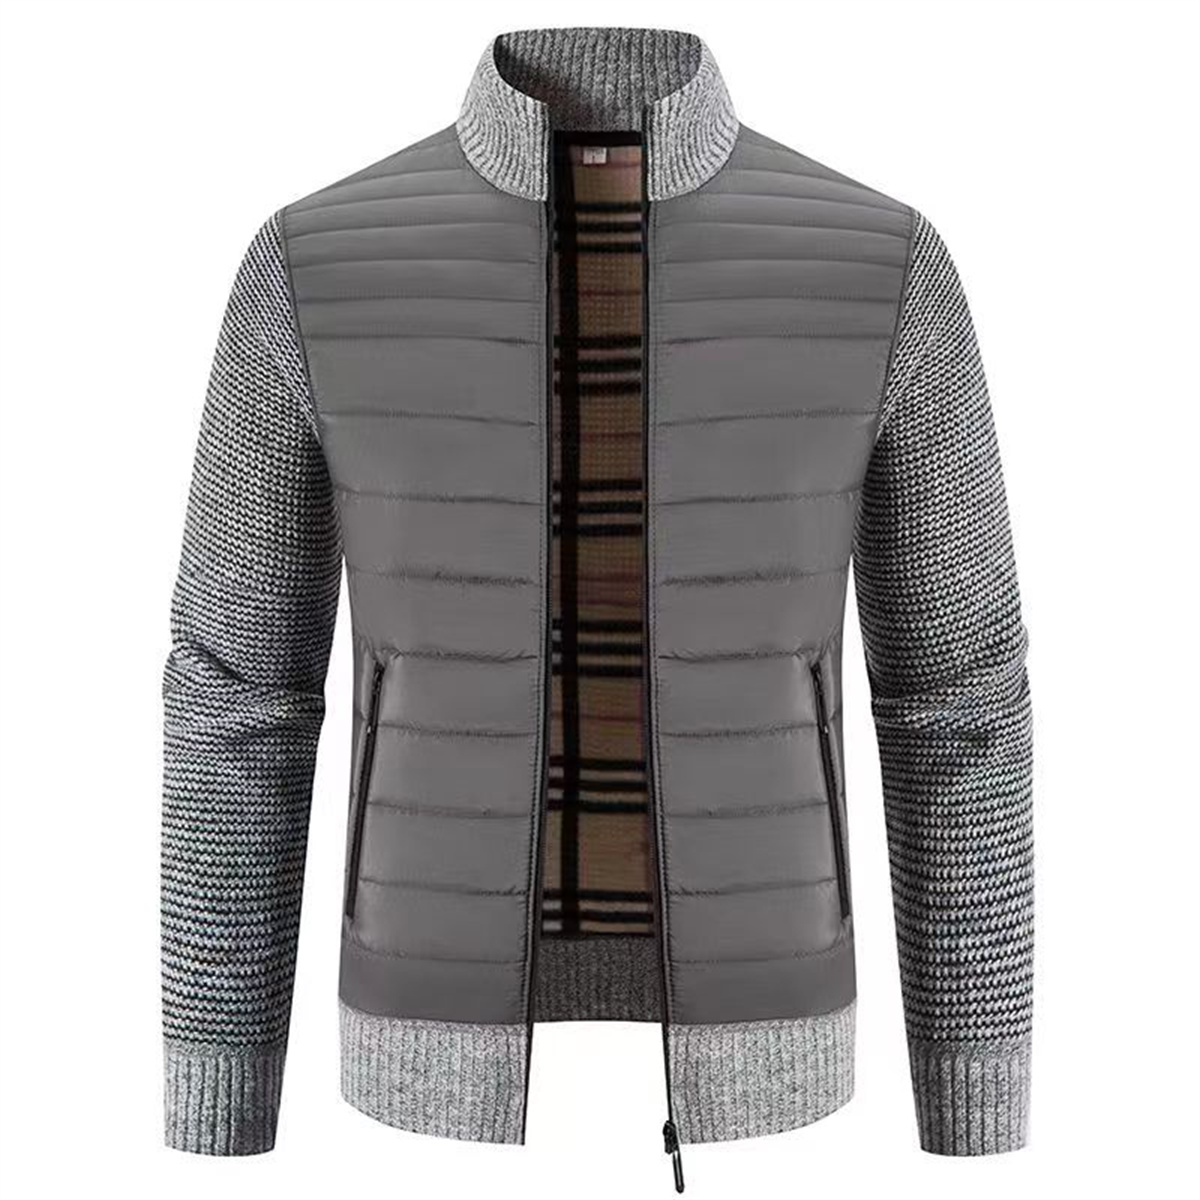 Mens Jacket Designer Men Coat Sports Fashion Jackets Wool Warm Sweatshirt Hoodie With Long Sleeve Zipper Windbreaker Man Clothing Tops